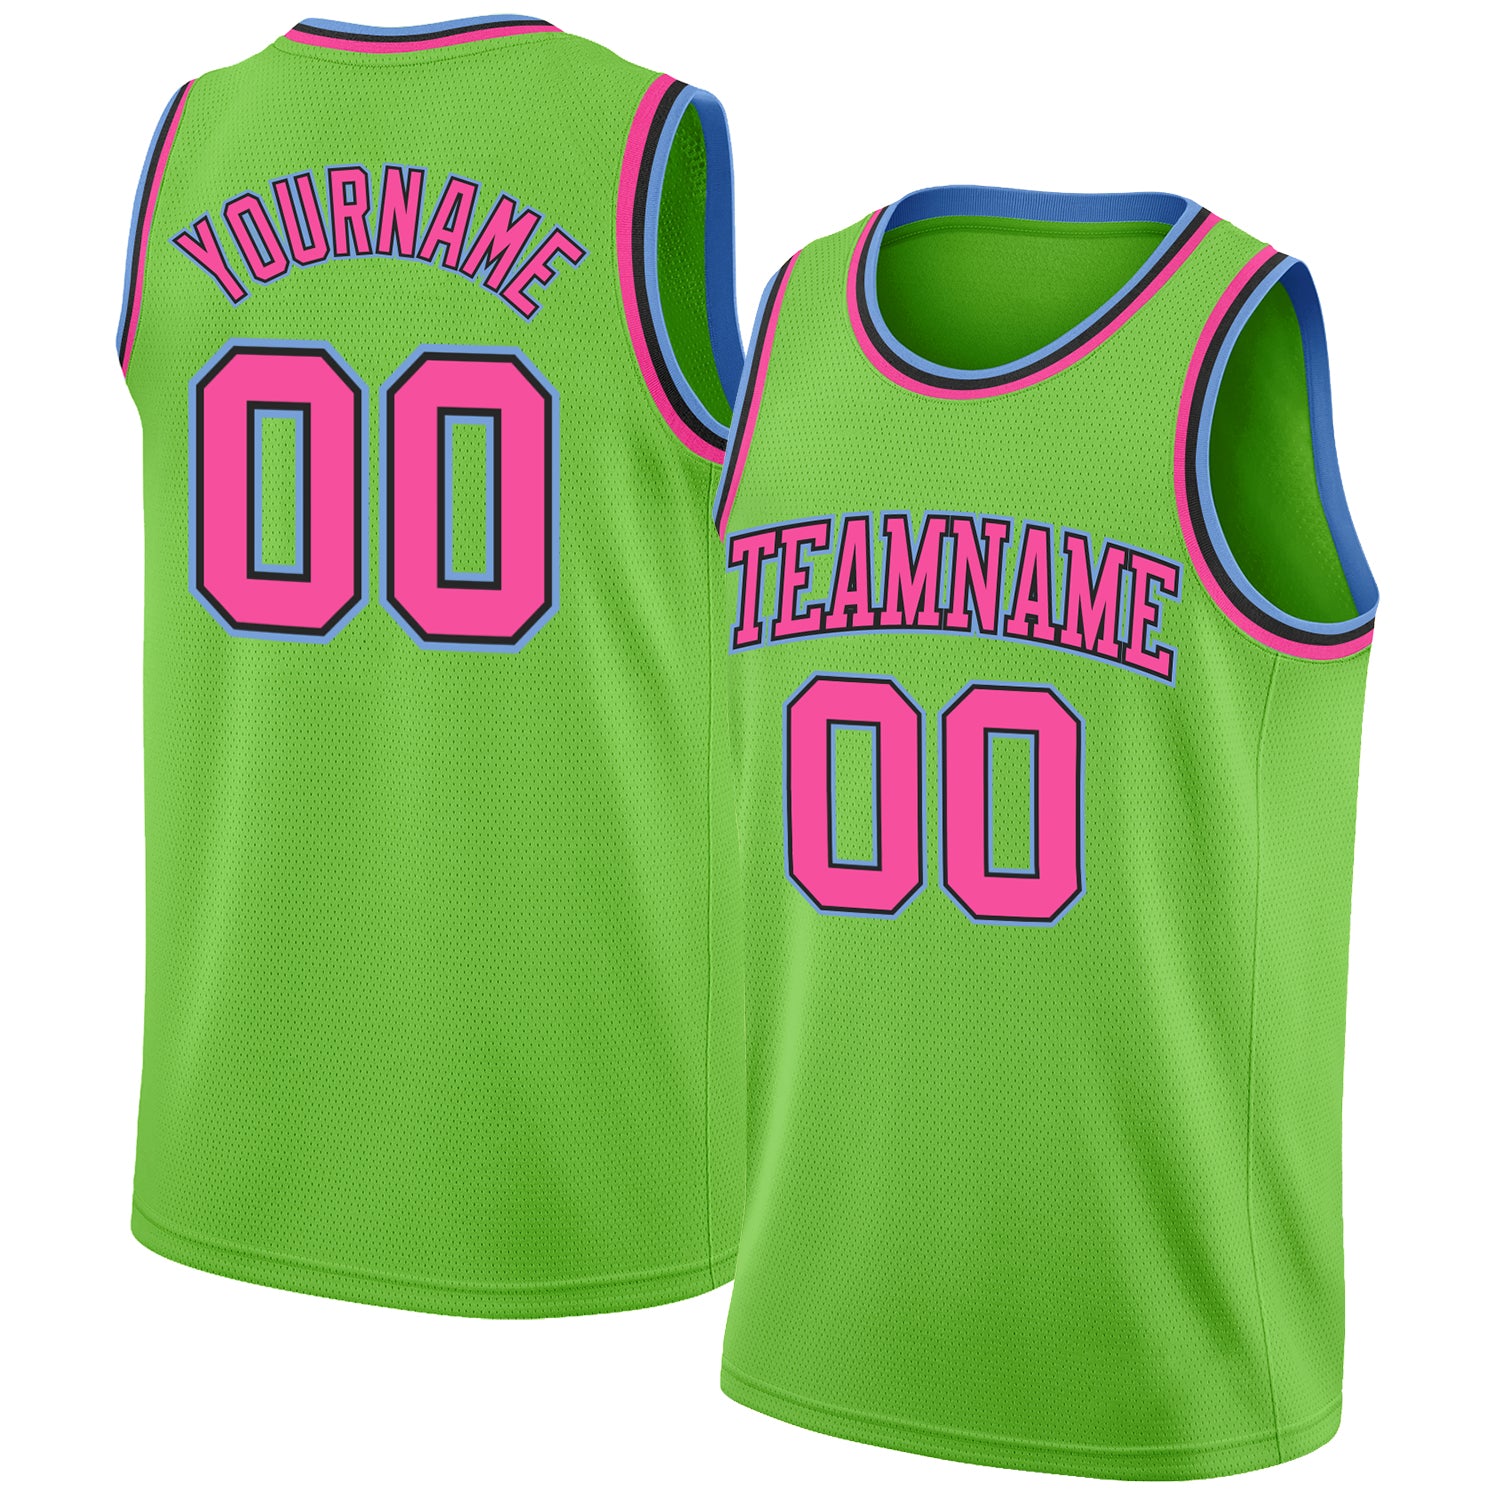 FANSIDEA Custom Pink White-Light Blue Authentic Throwback Basketball Jersey Men's Size:3XL